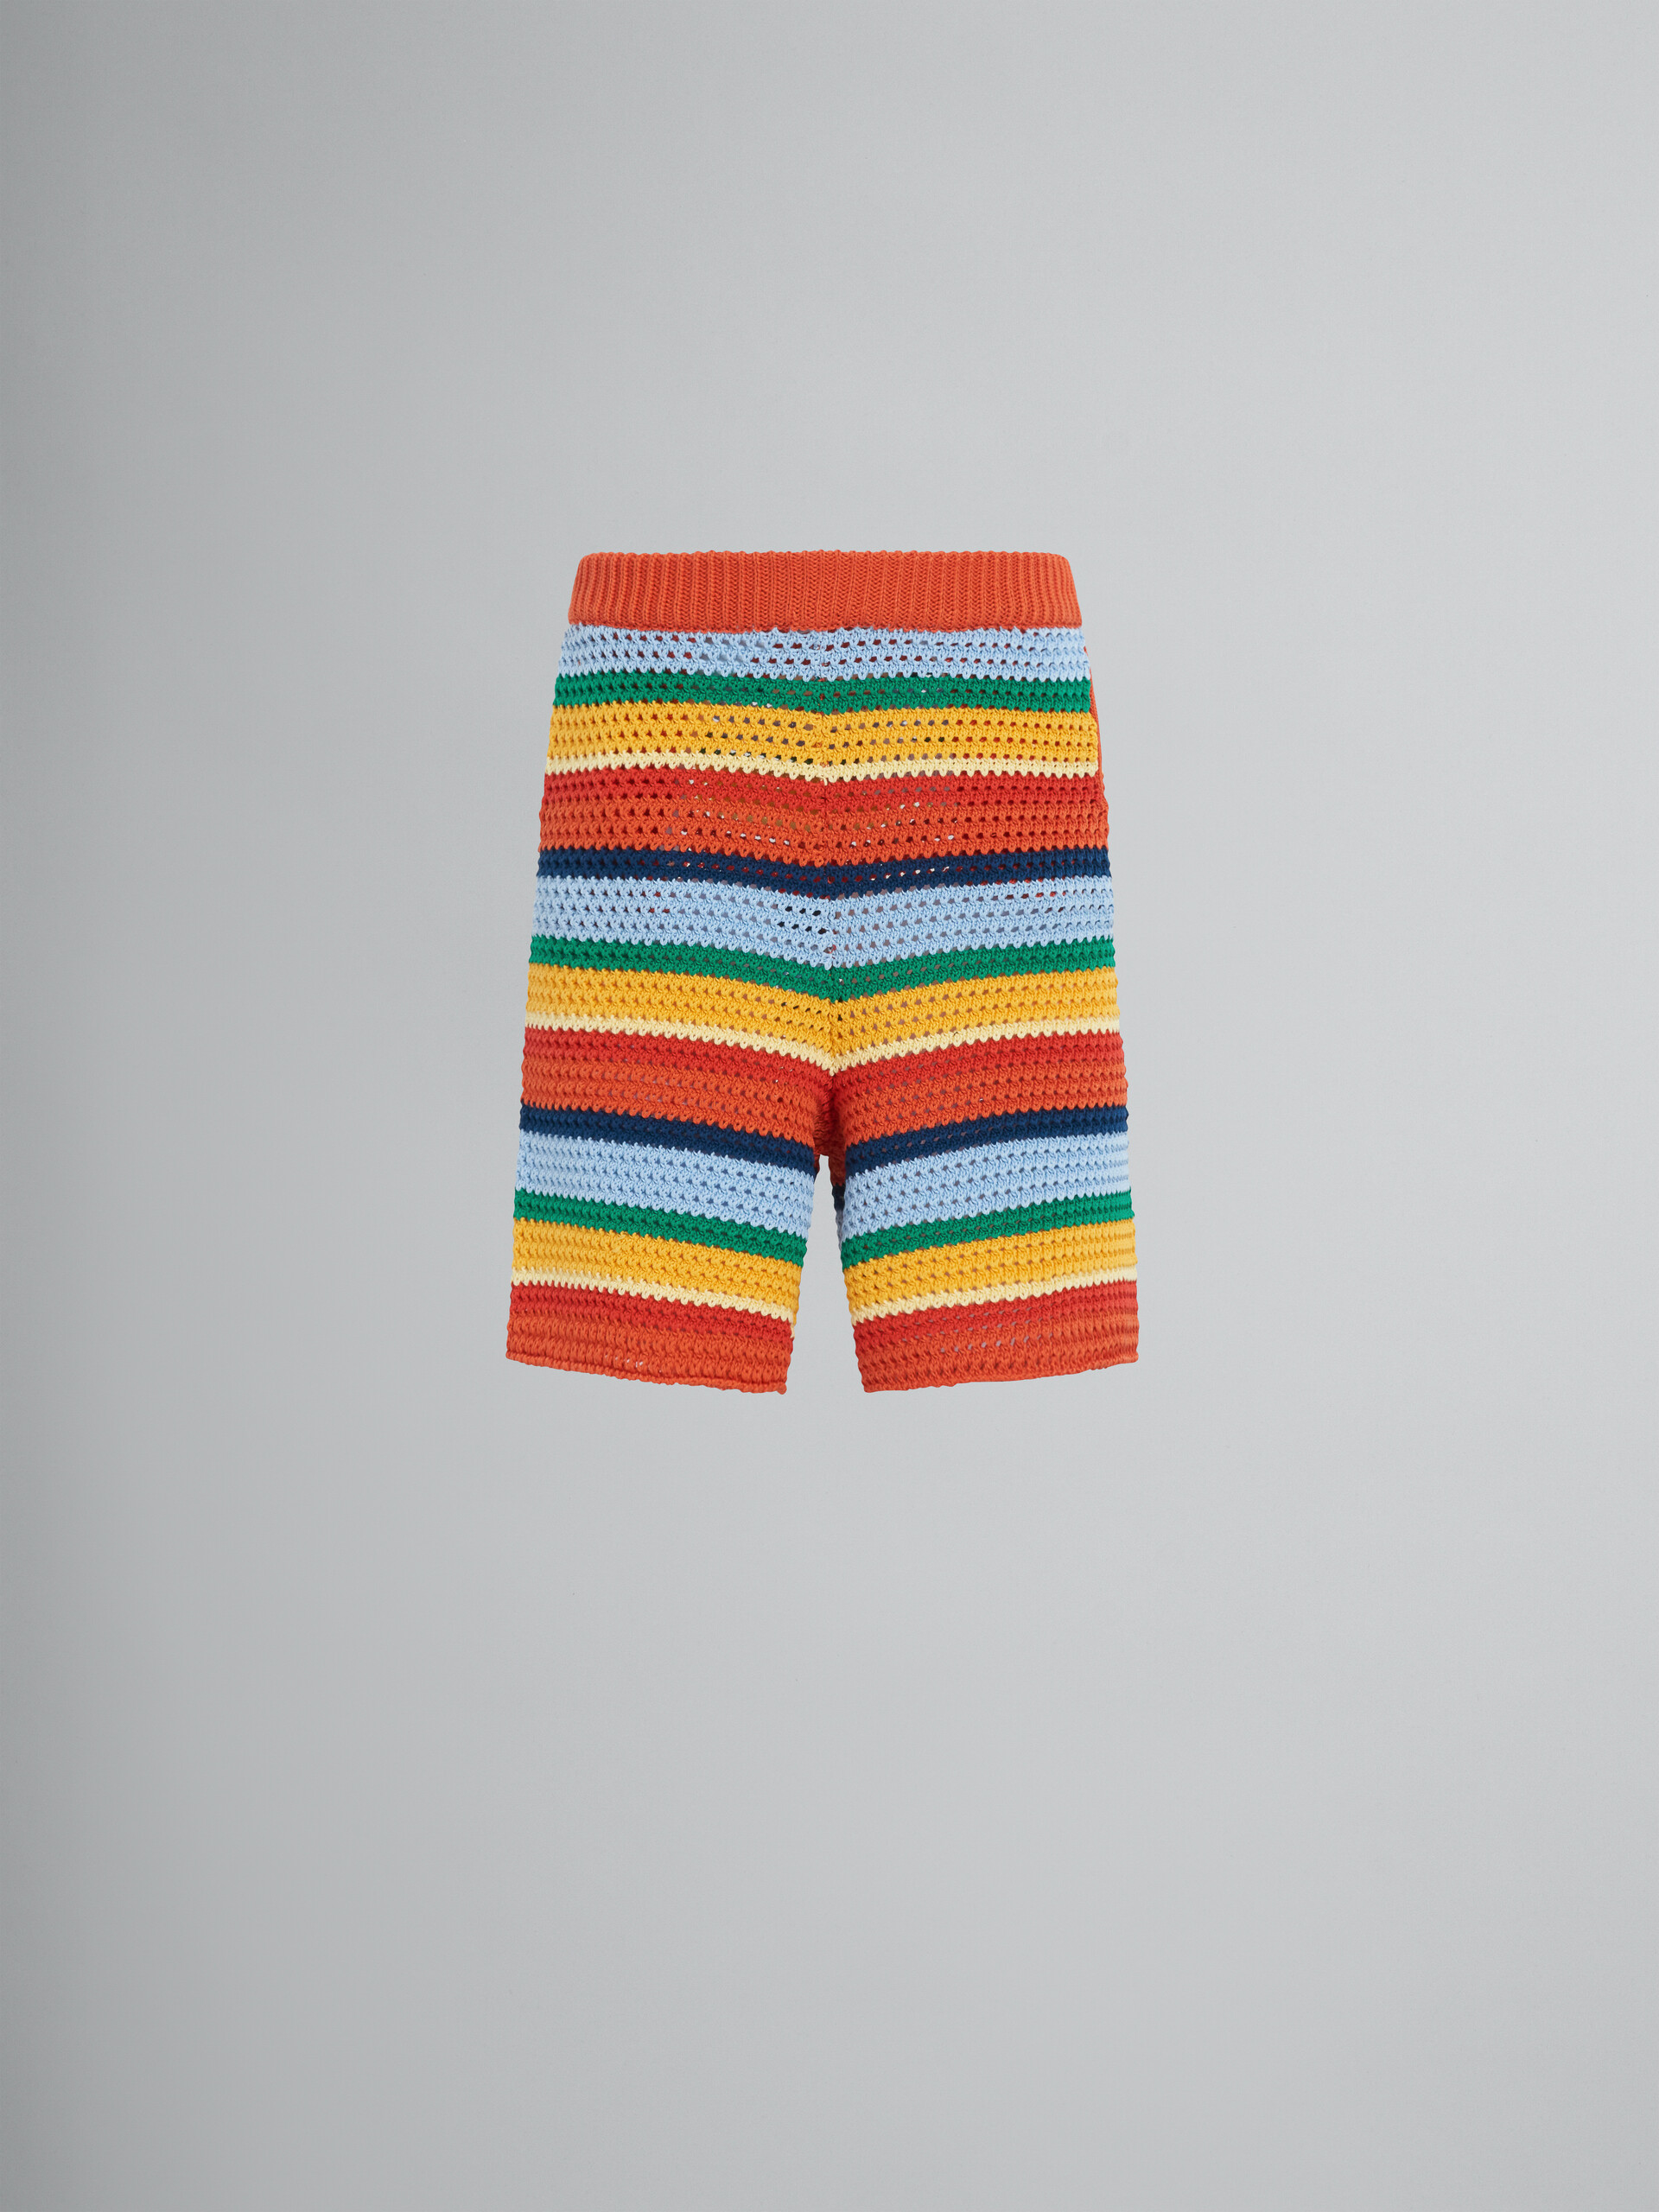 Marni x No Vacancy Inn - Multicolour cotton-knit bermuda shorts - Pants - Image 1